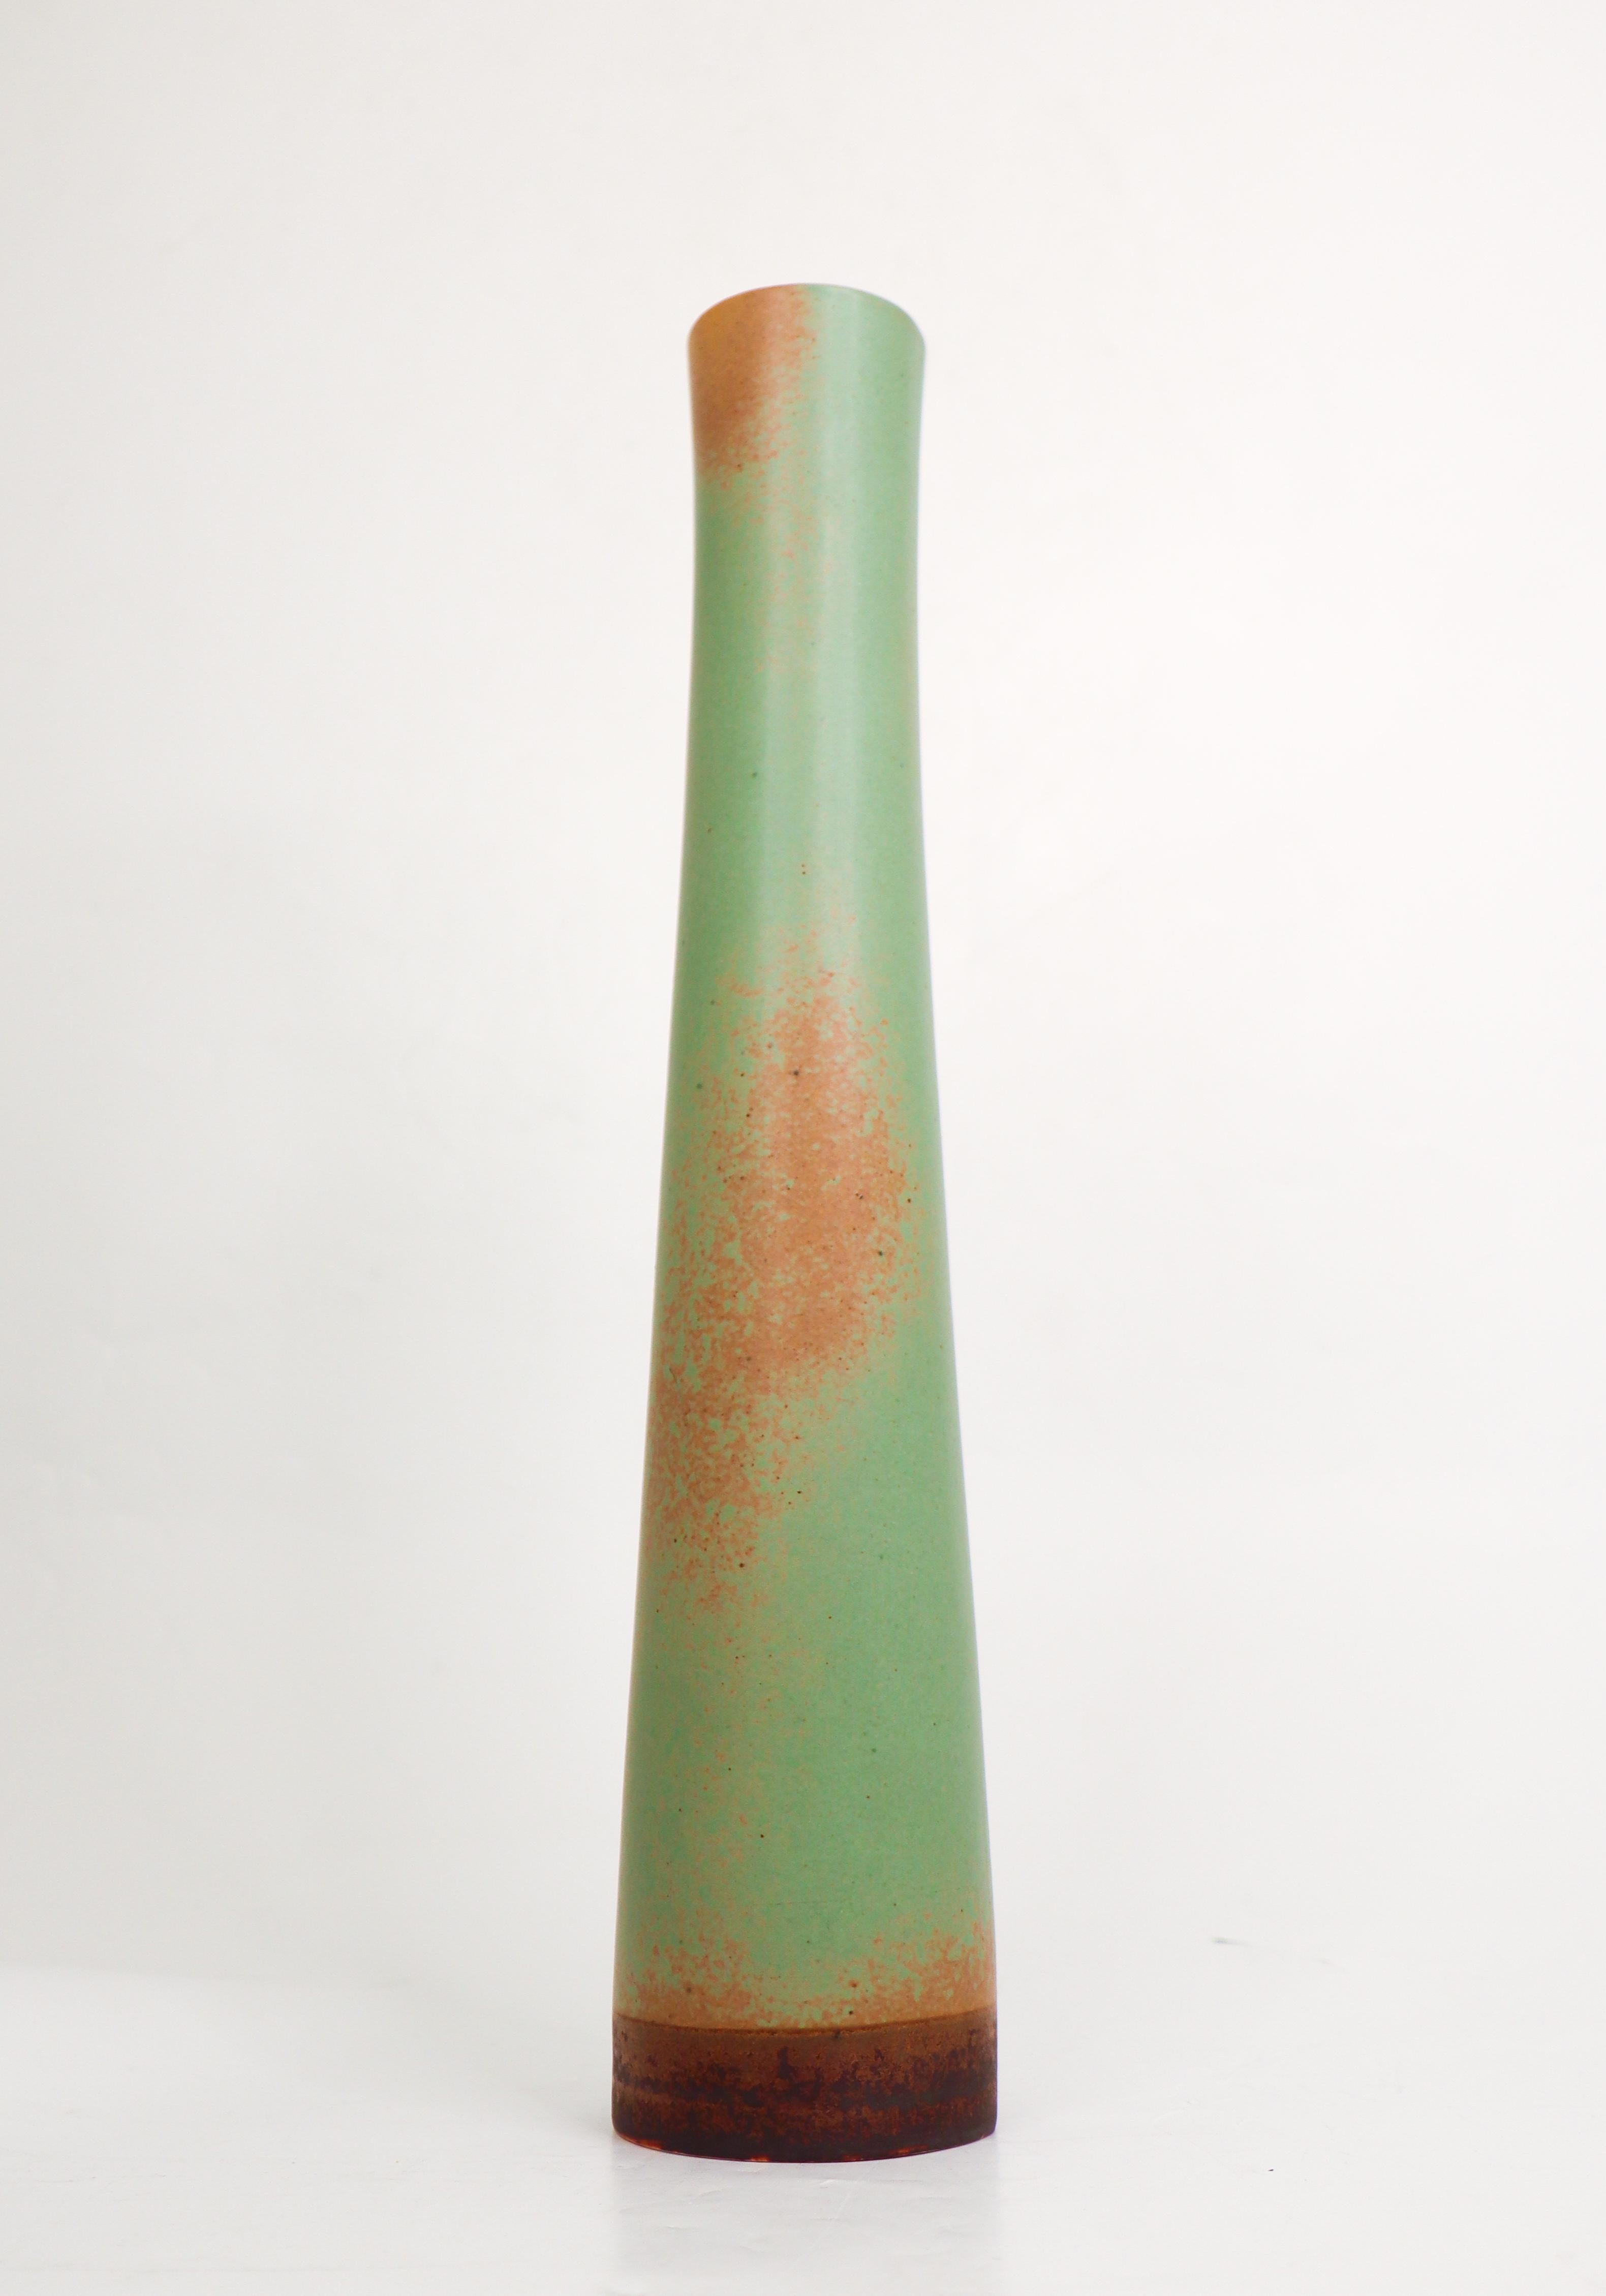 Glazed Large Green Stoneware Vase - Annikki Hovisaari - Arabia - Midcentury Modern For Sale